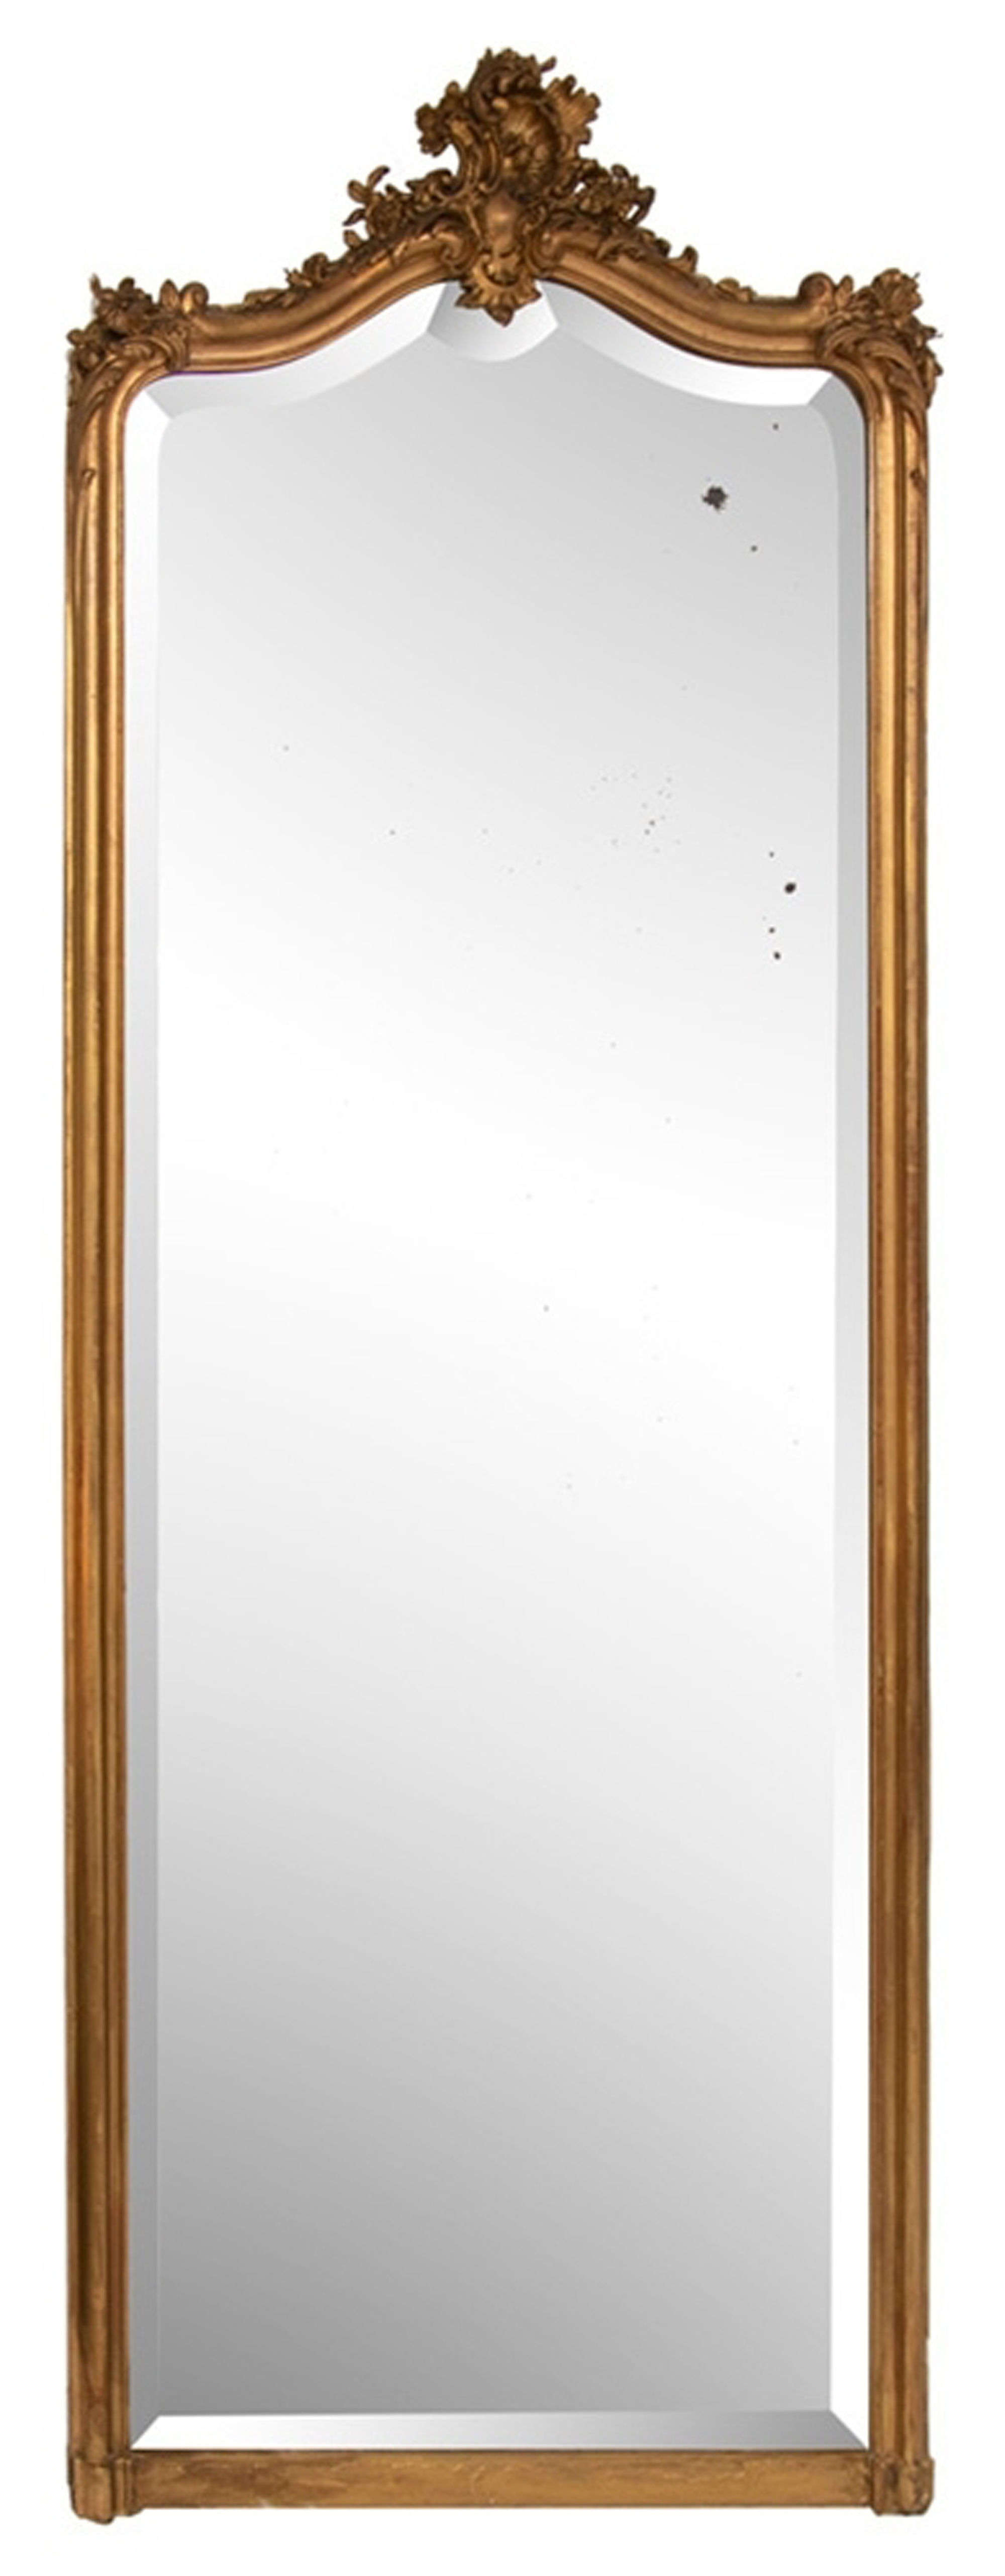 An antique gilded full-length mirror